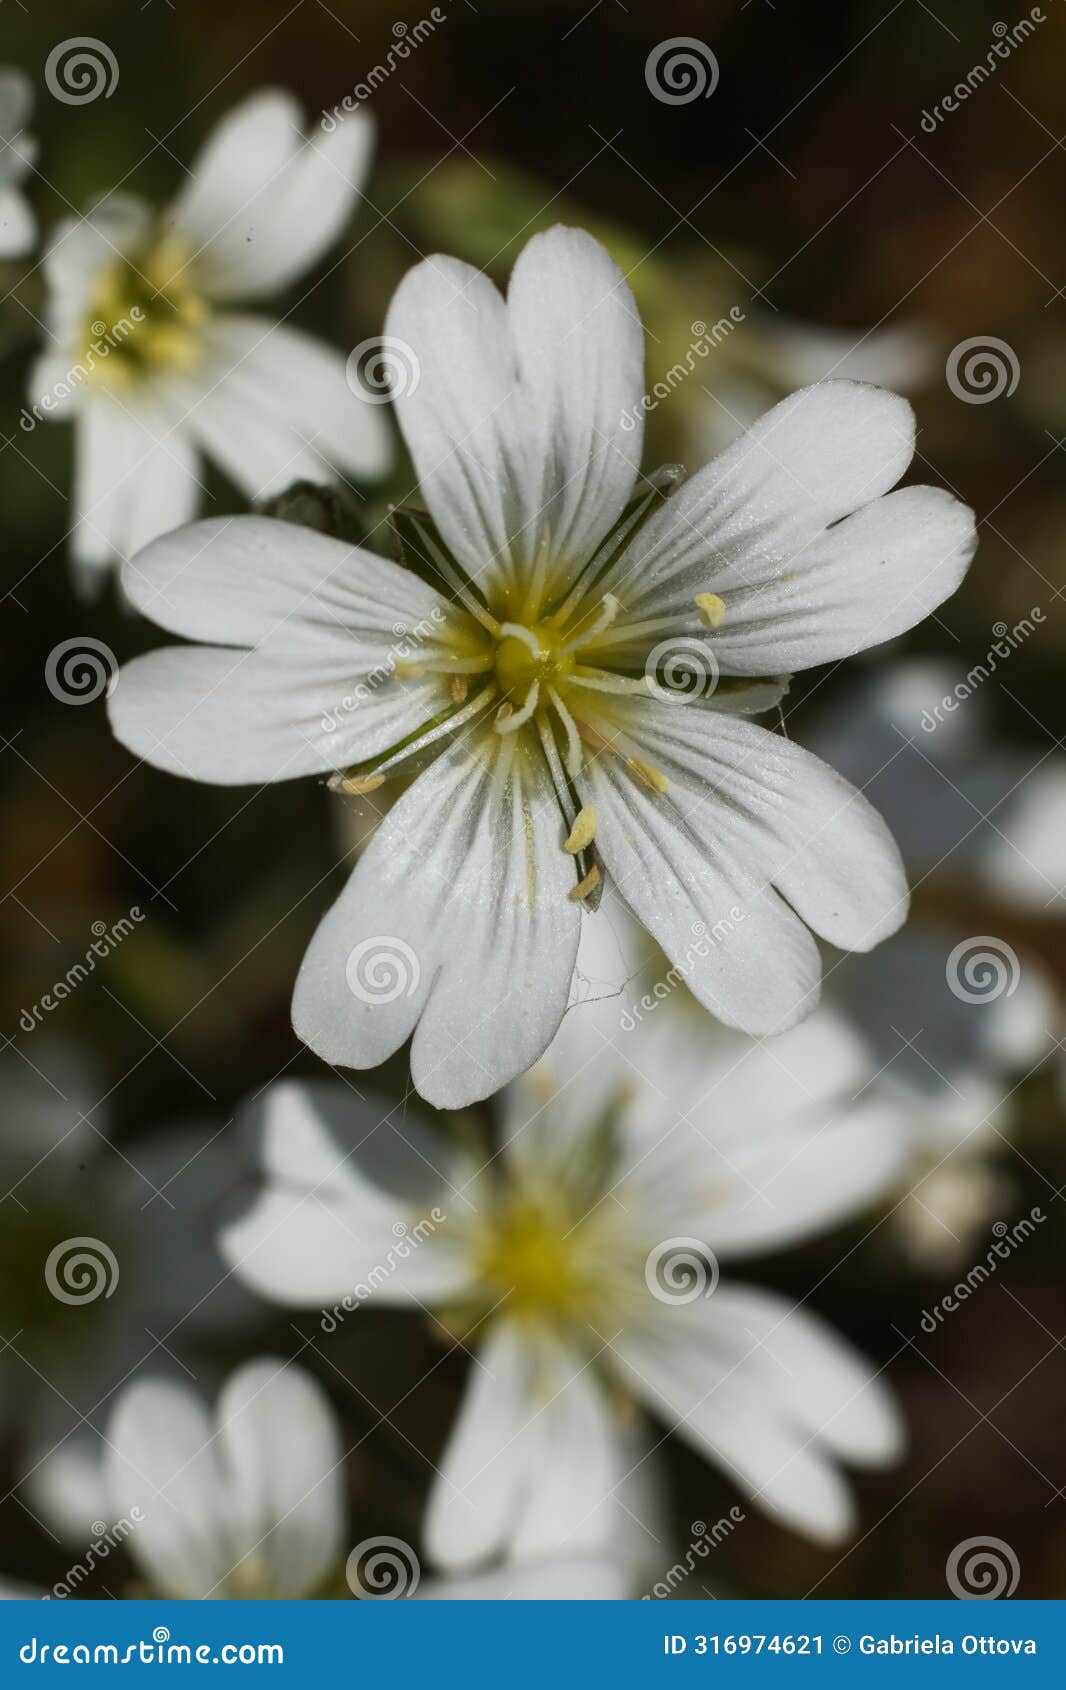 beautiful cerastium arvense flowers